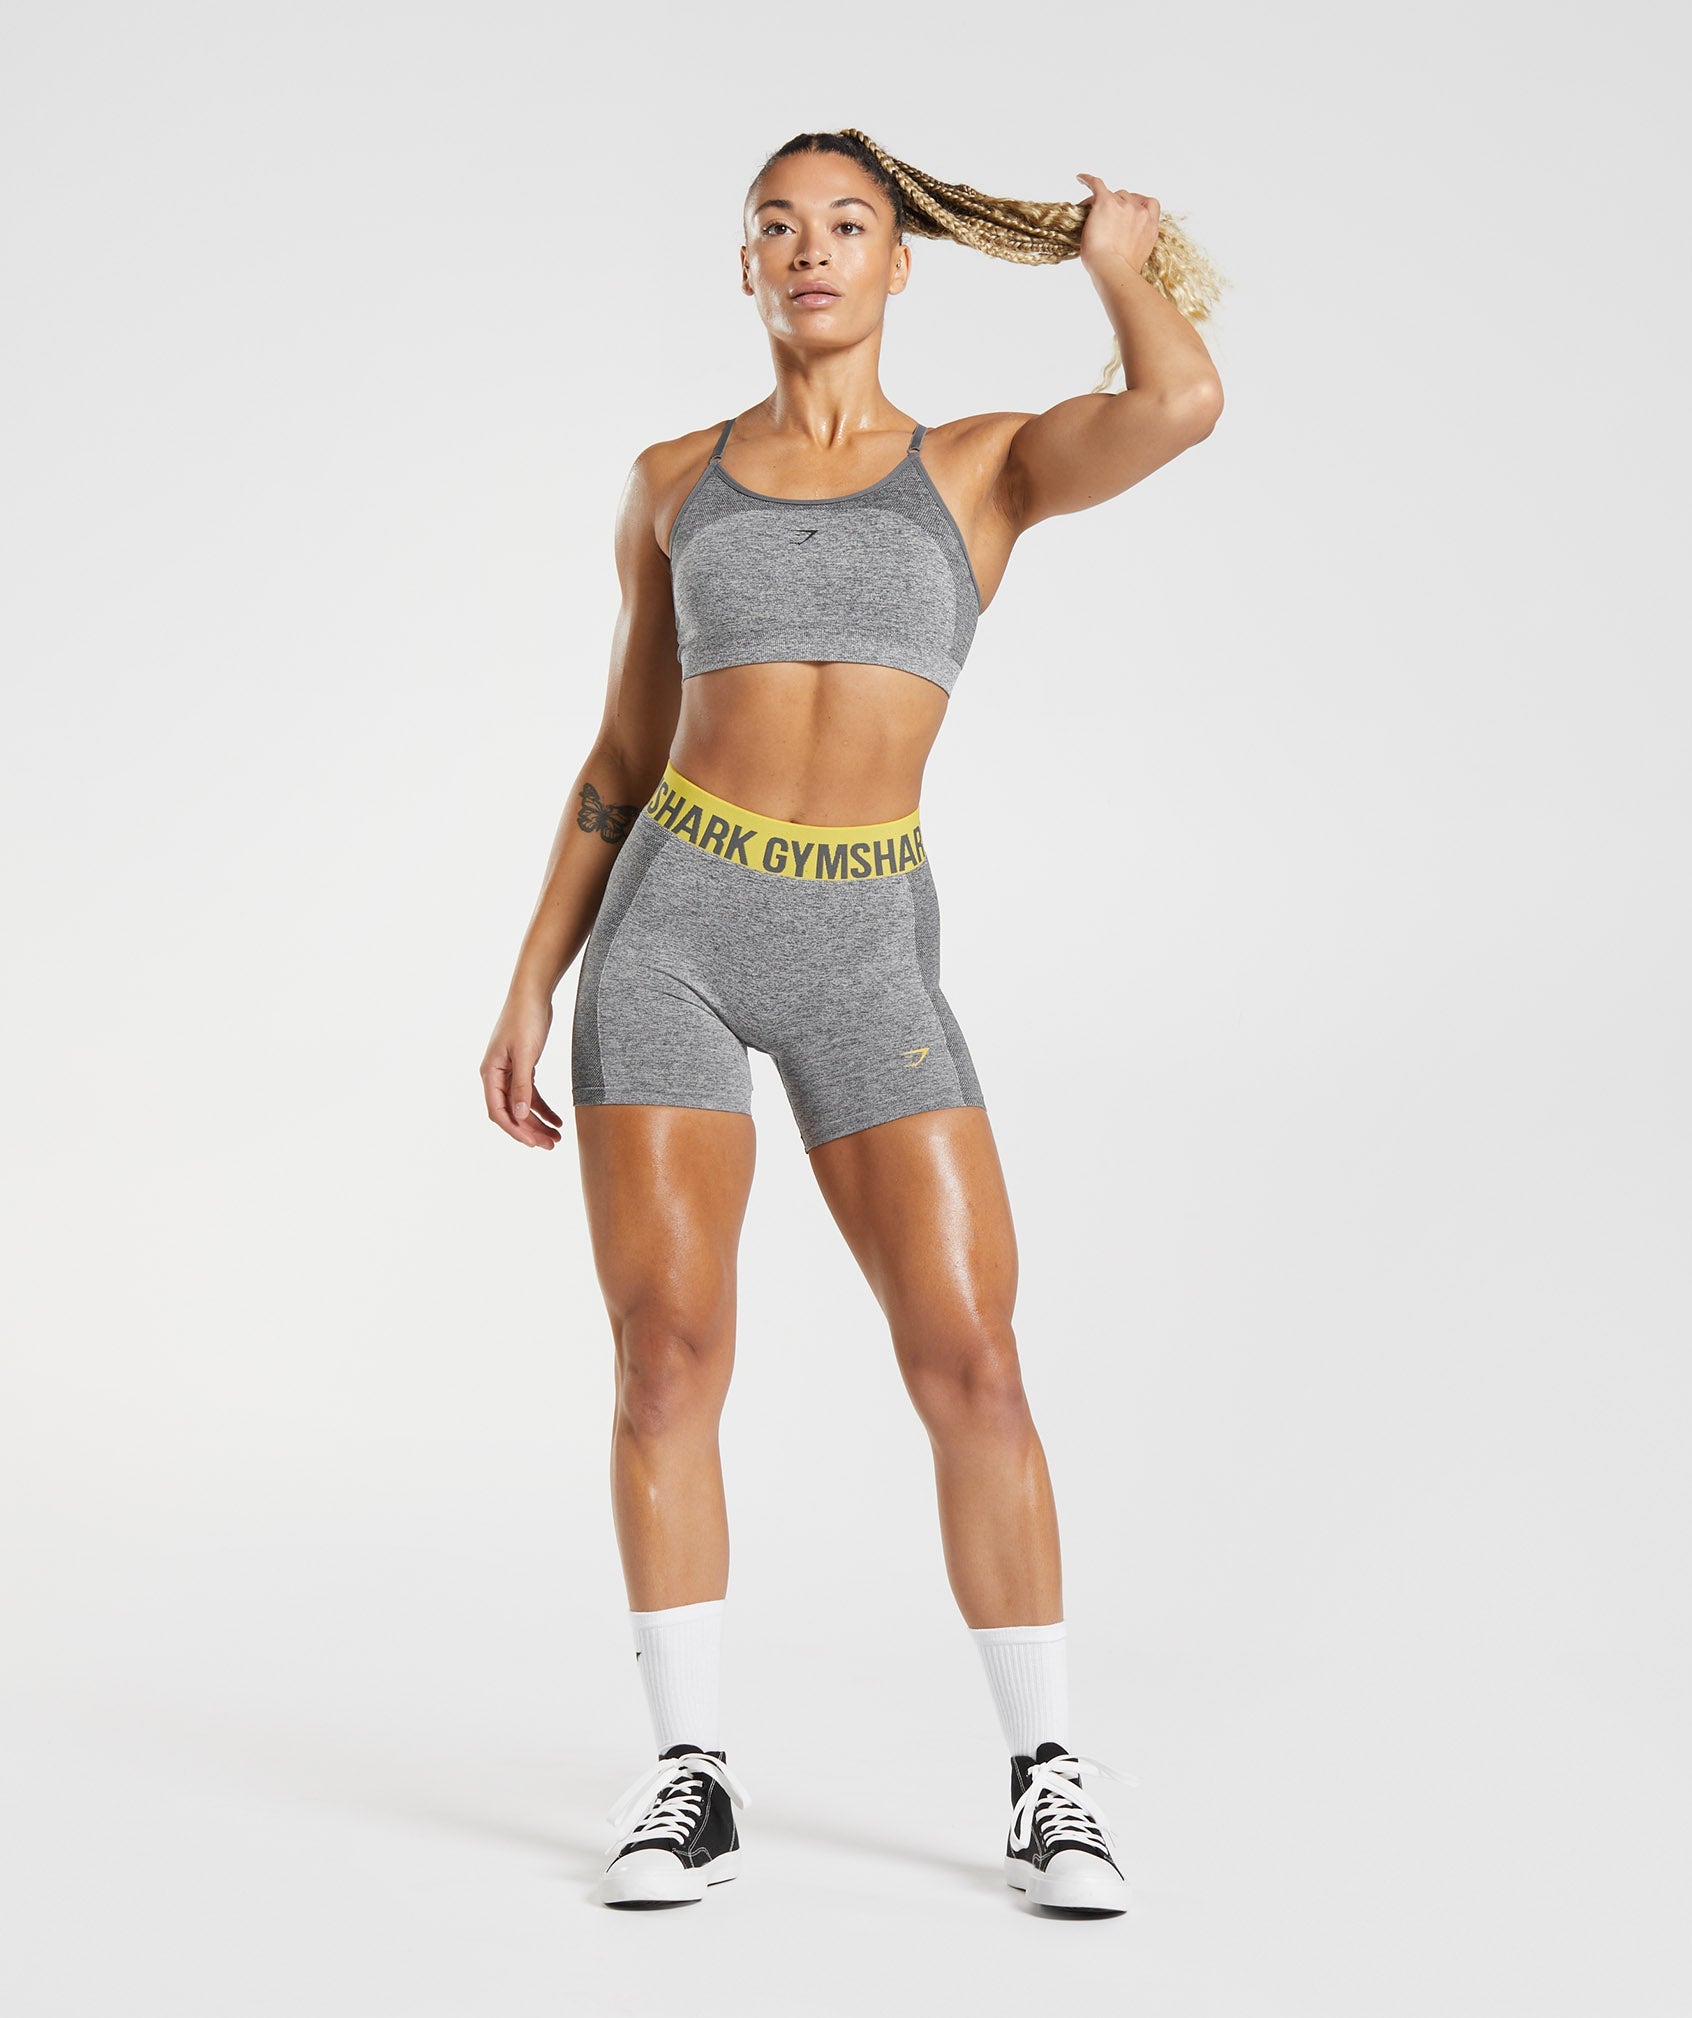 Gymshark Flex Shorts Medium - $34 - From Kealy